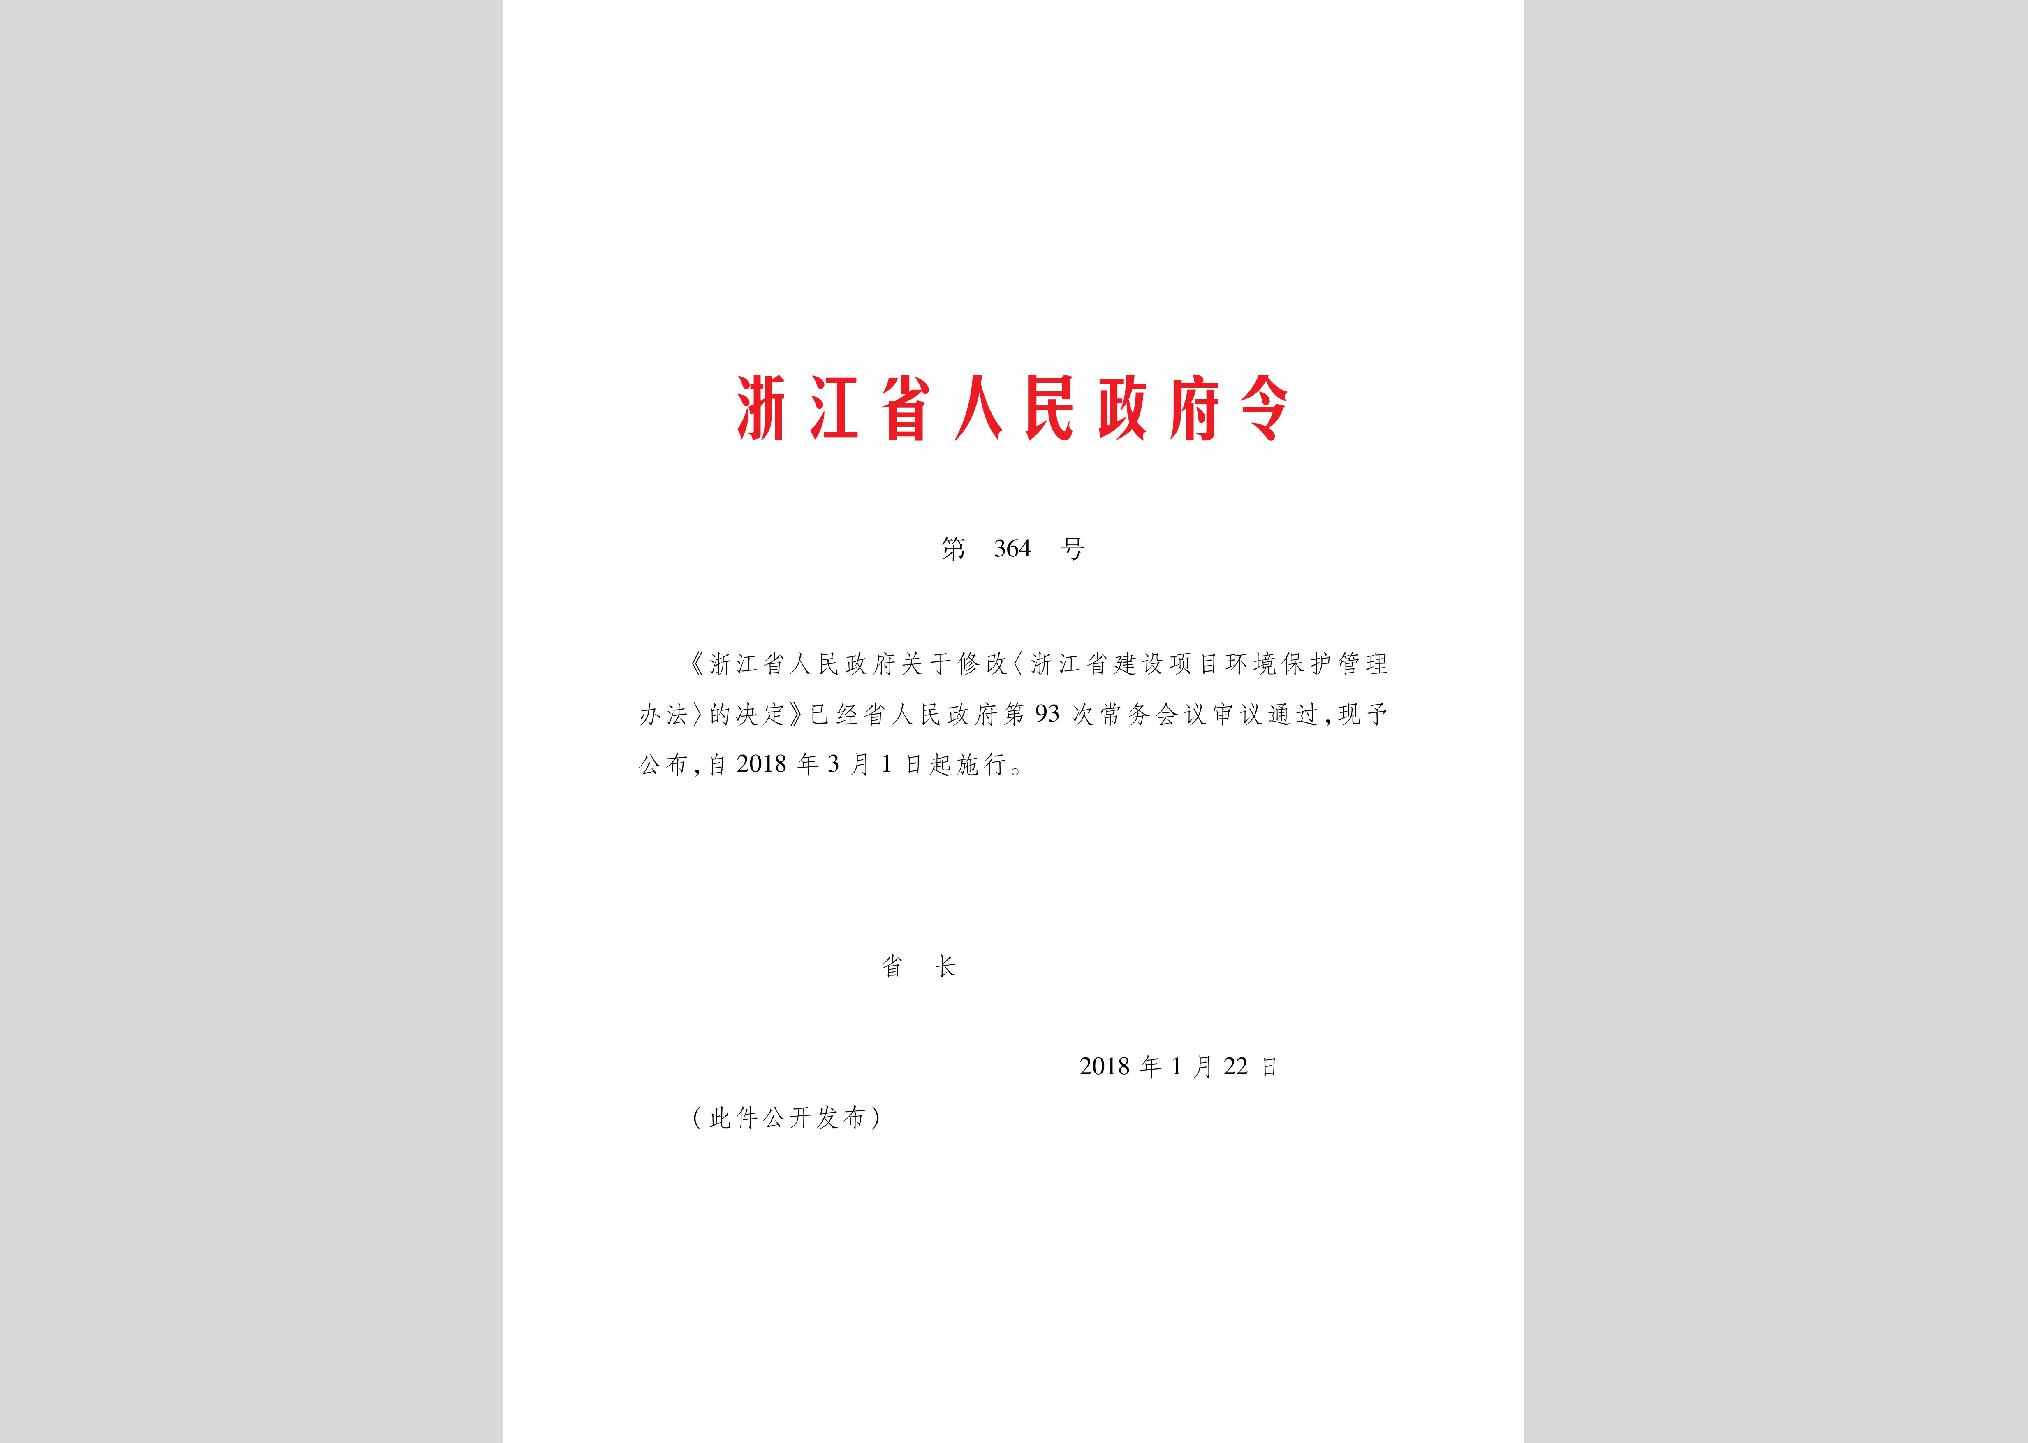 ZJSRMZFL-364-2018：浙江省建设项目环境保护管理办法